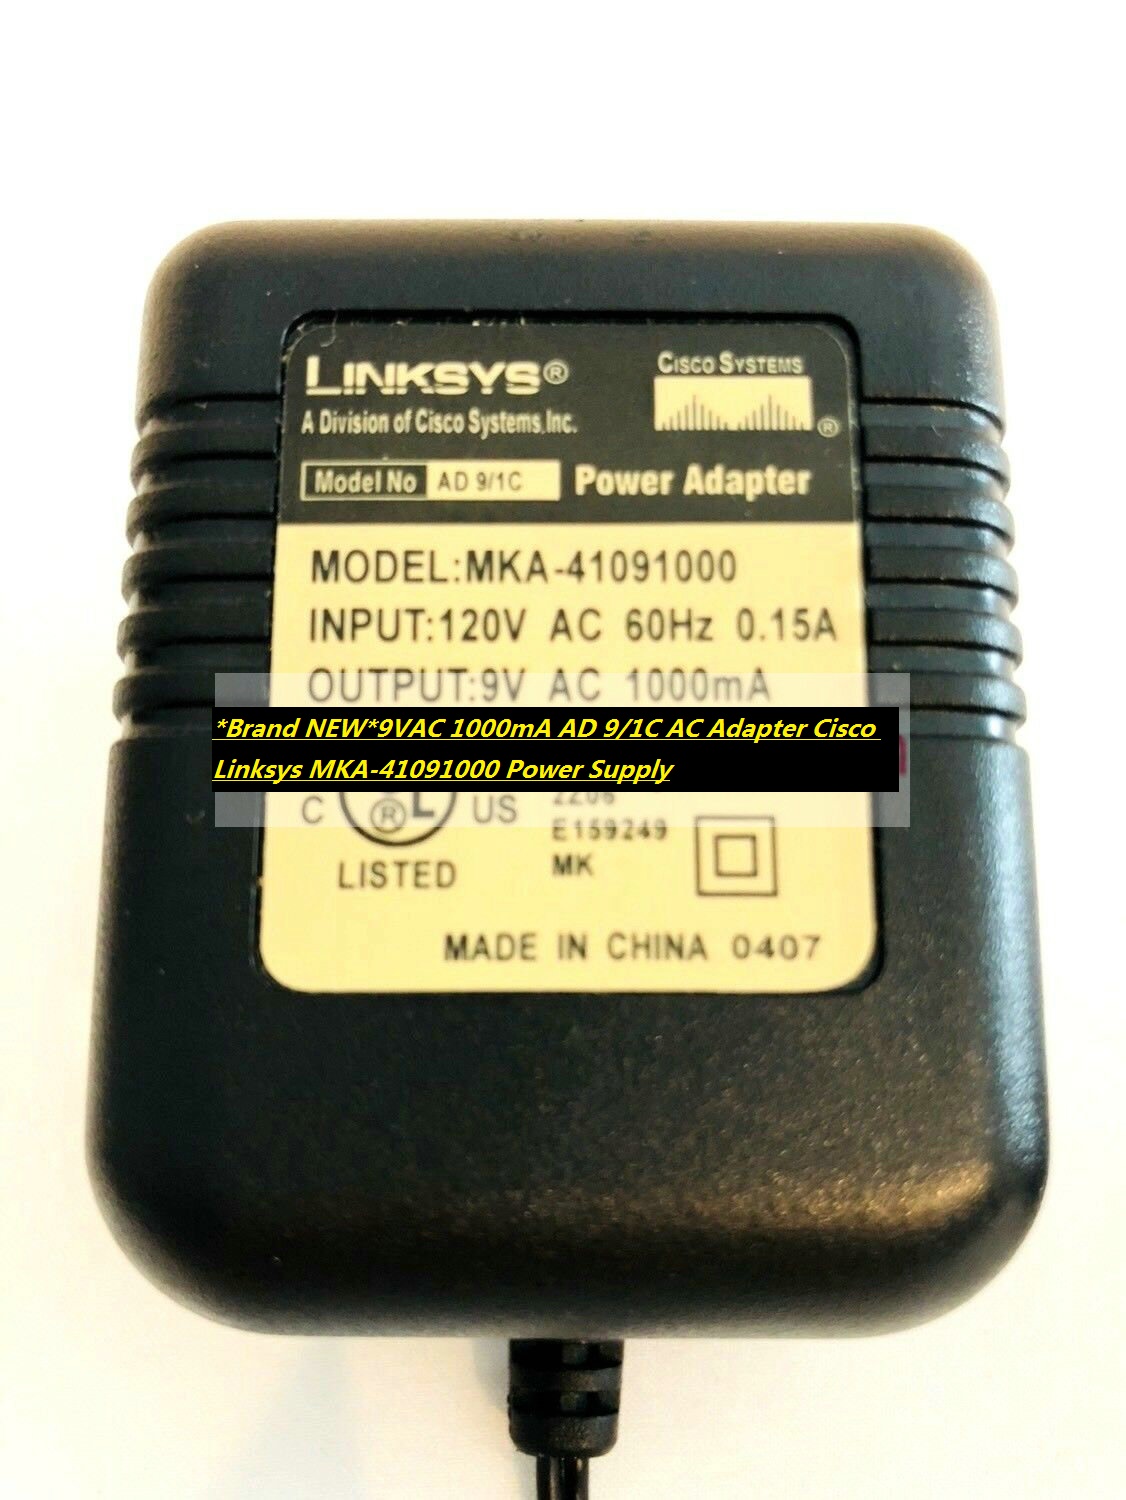 *Brand NEW*9VAC 1000mA AD 9/1C AC Adapter Cisco Linksys MKA-41091000 Power Supply